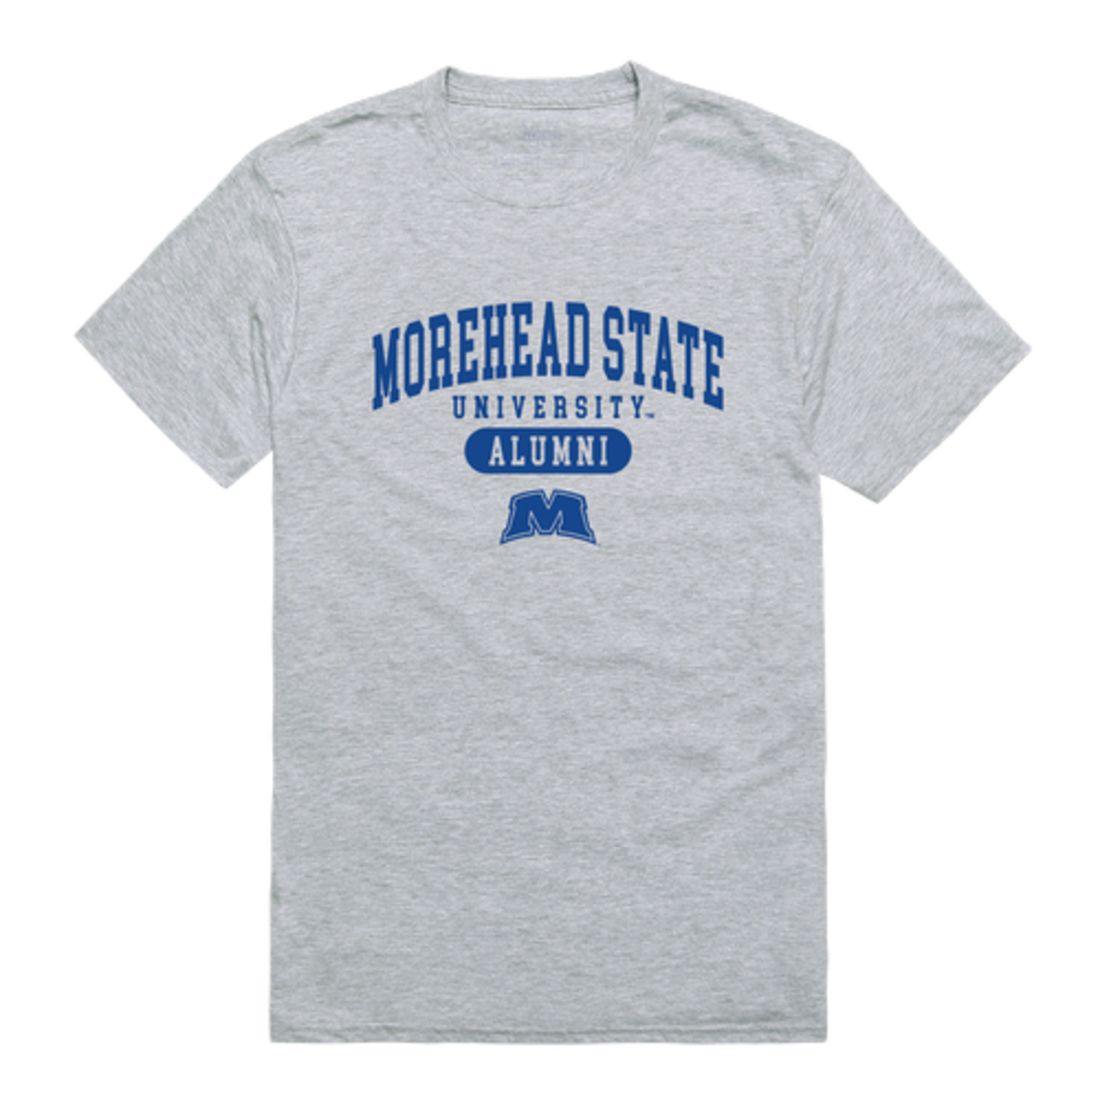 MSU Morehead State University Eagles Alumni Tee T-Shirt